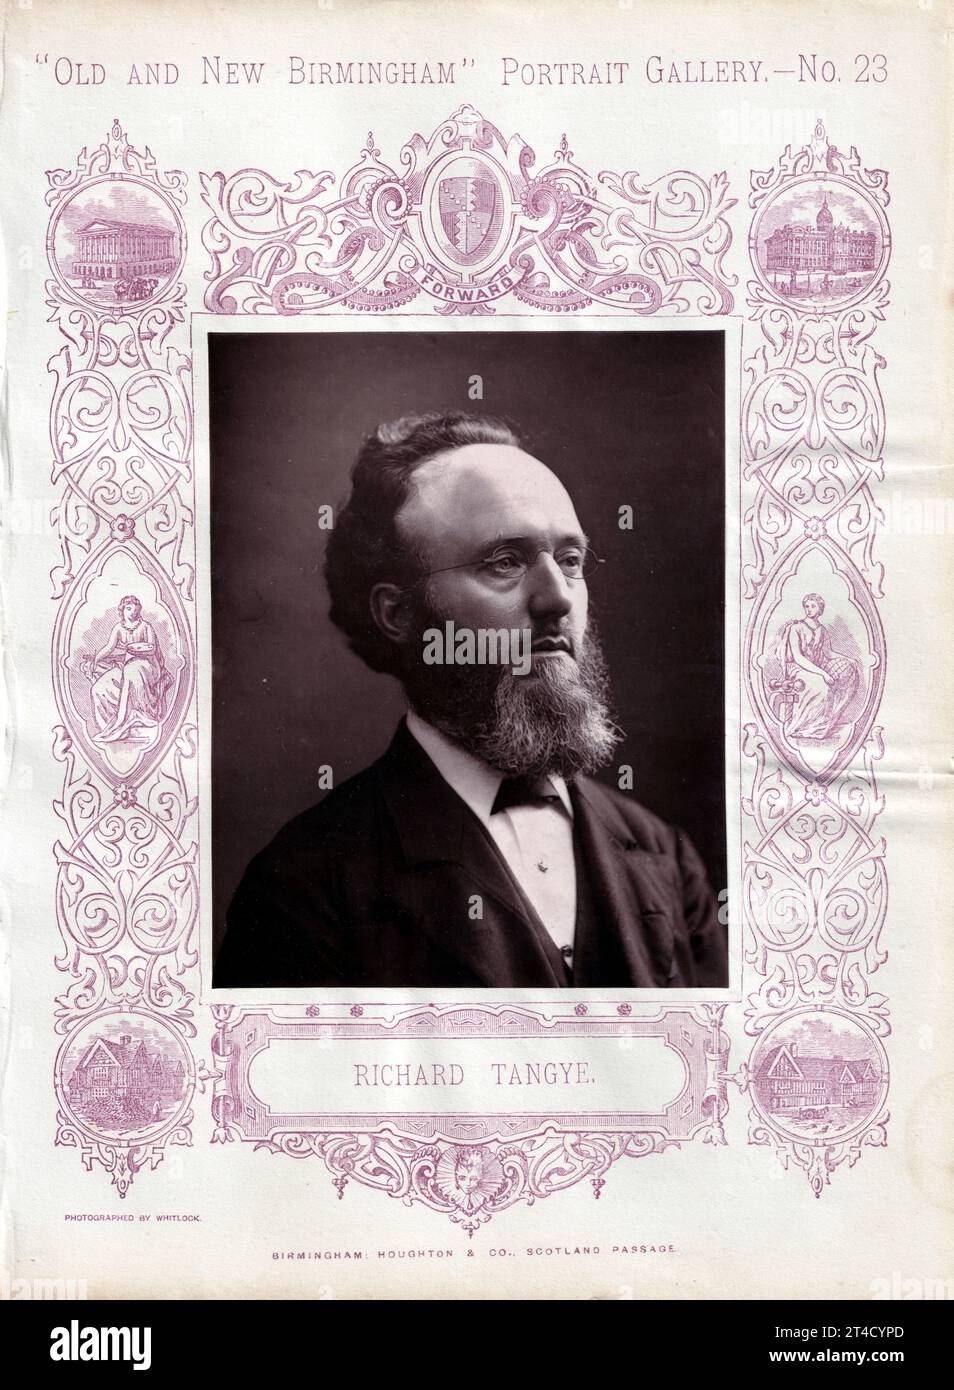 Sir Richard Trevithick Tangye (1833-1906) par Henry Joseph Whitlock (1835-1918), 'Old and New Birmingham' Portrait Gallery, Houghton et Hammond, 1879. Banque D'Images